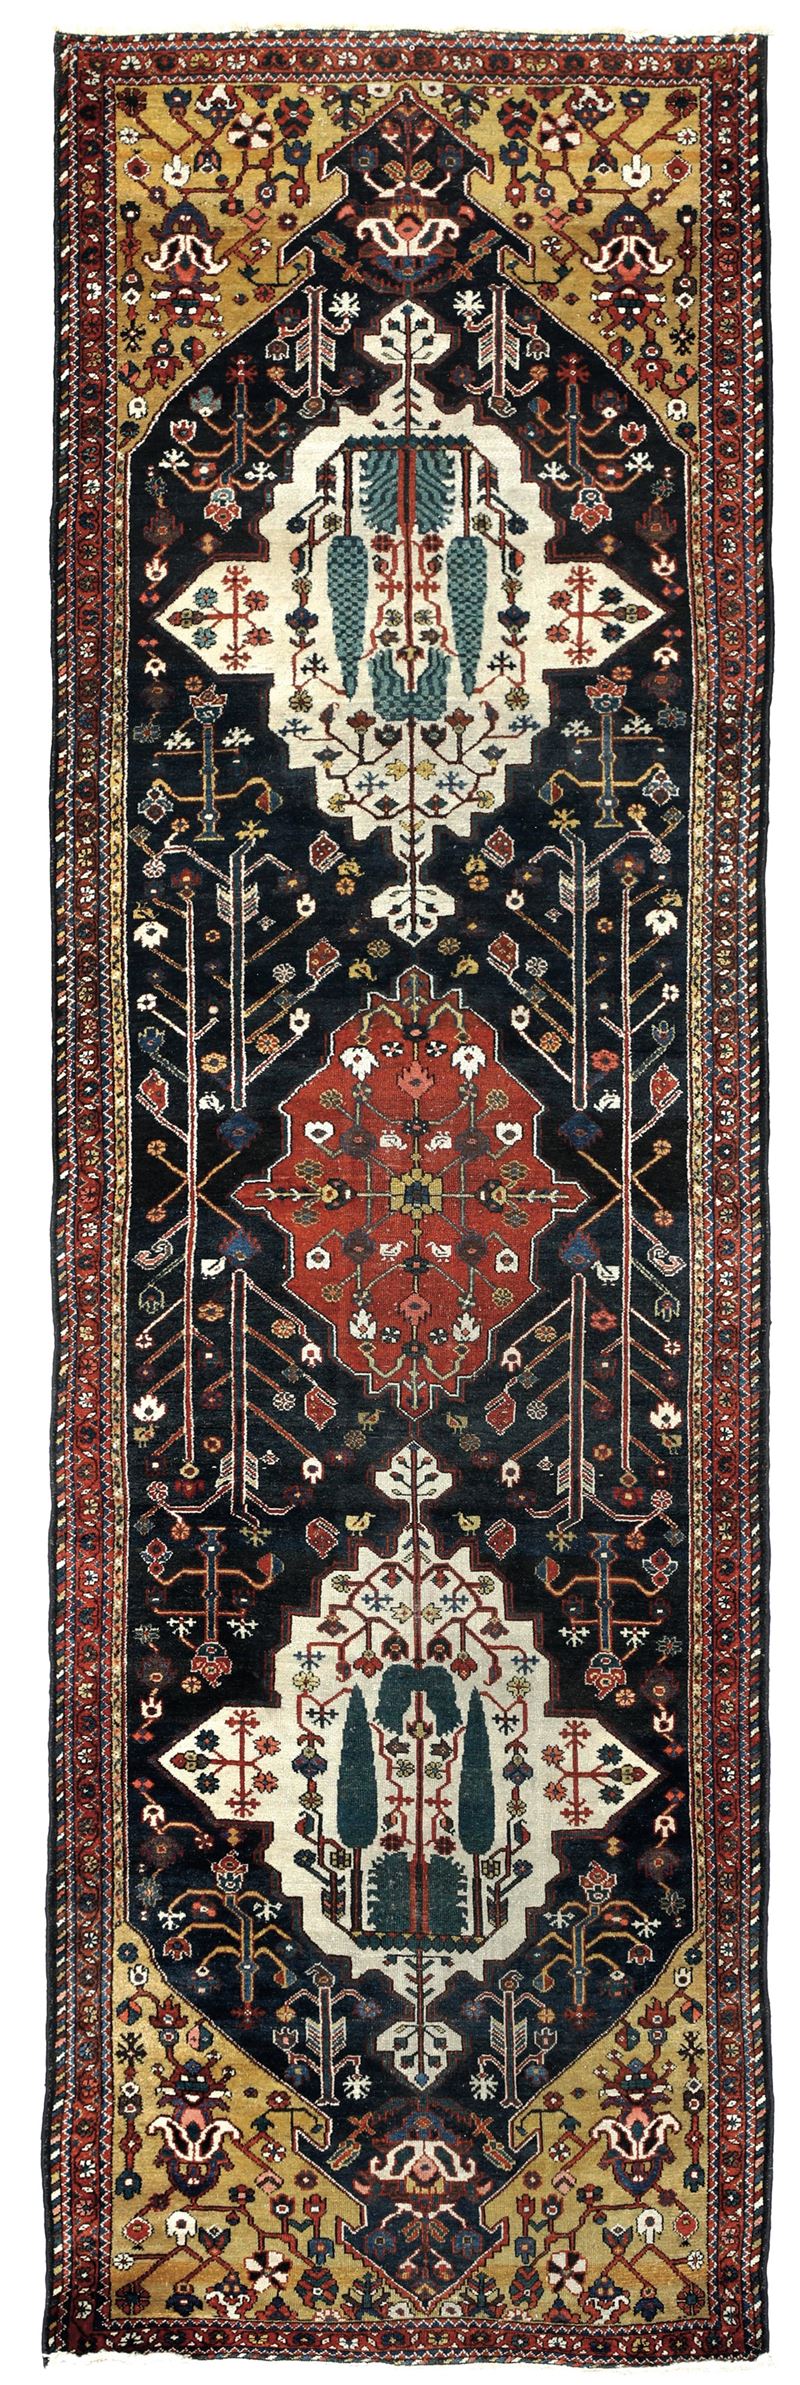 Passatoia Baktiary, Persia inizio XX secolo  - Auction Antique carpets - Cambi Casa d'Aste